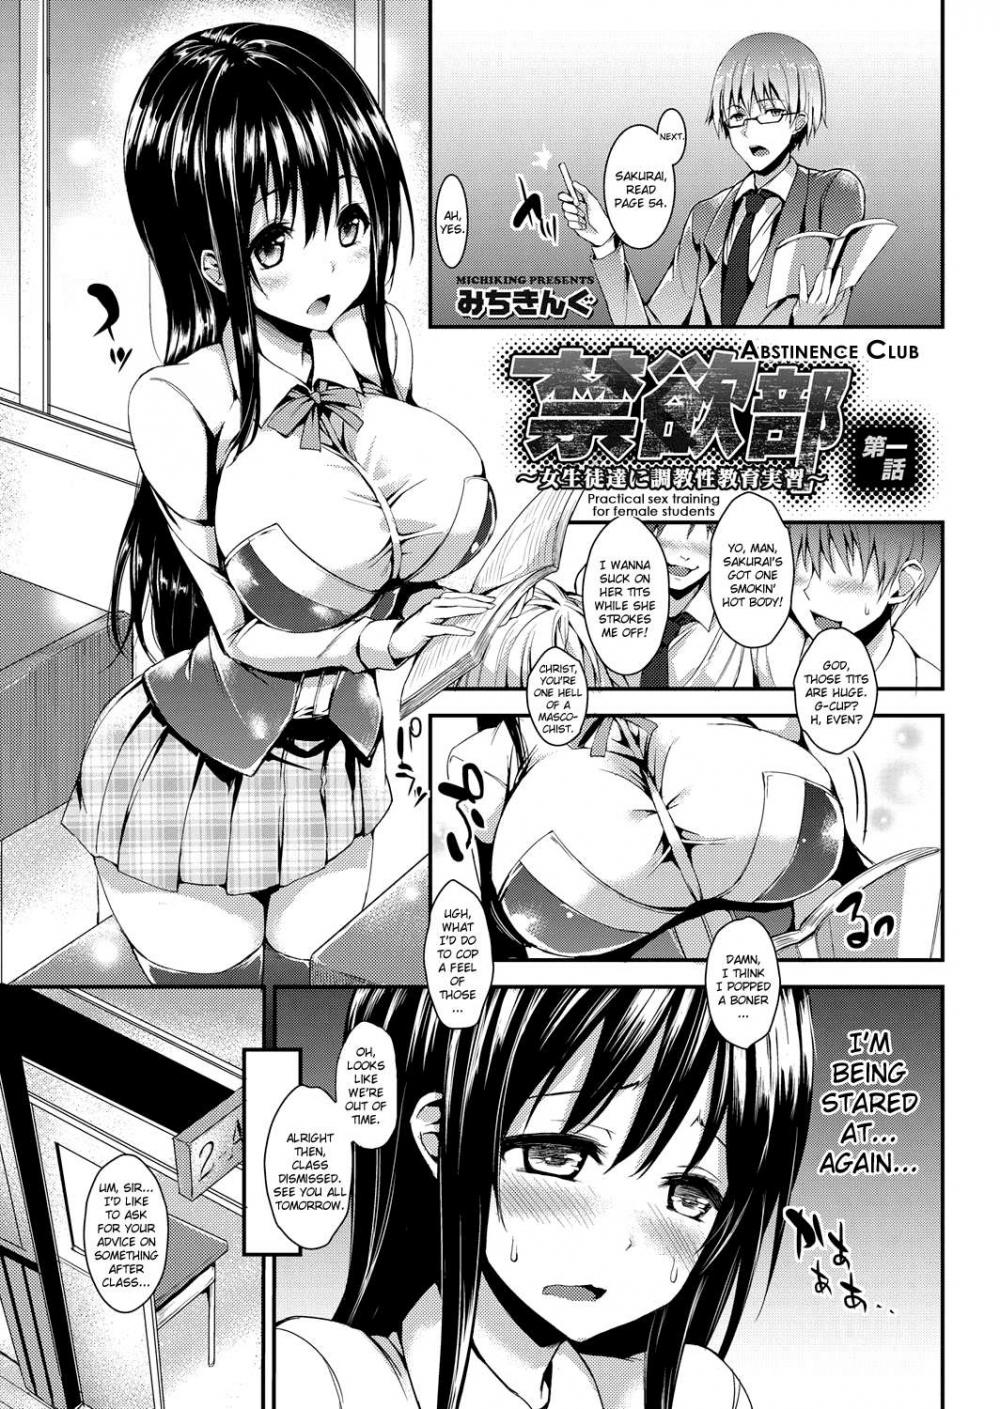 Hentai Manga Comic-Abstinence Club-Chapter 1-1